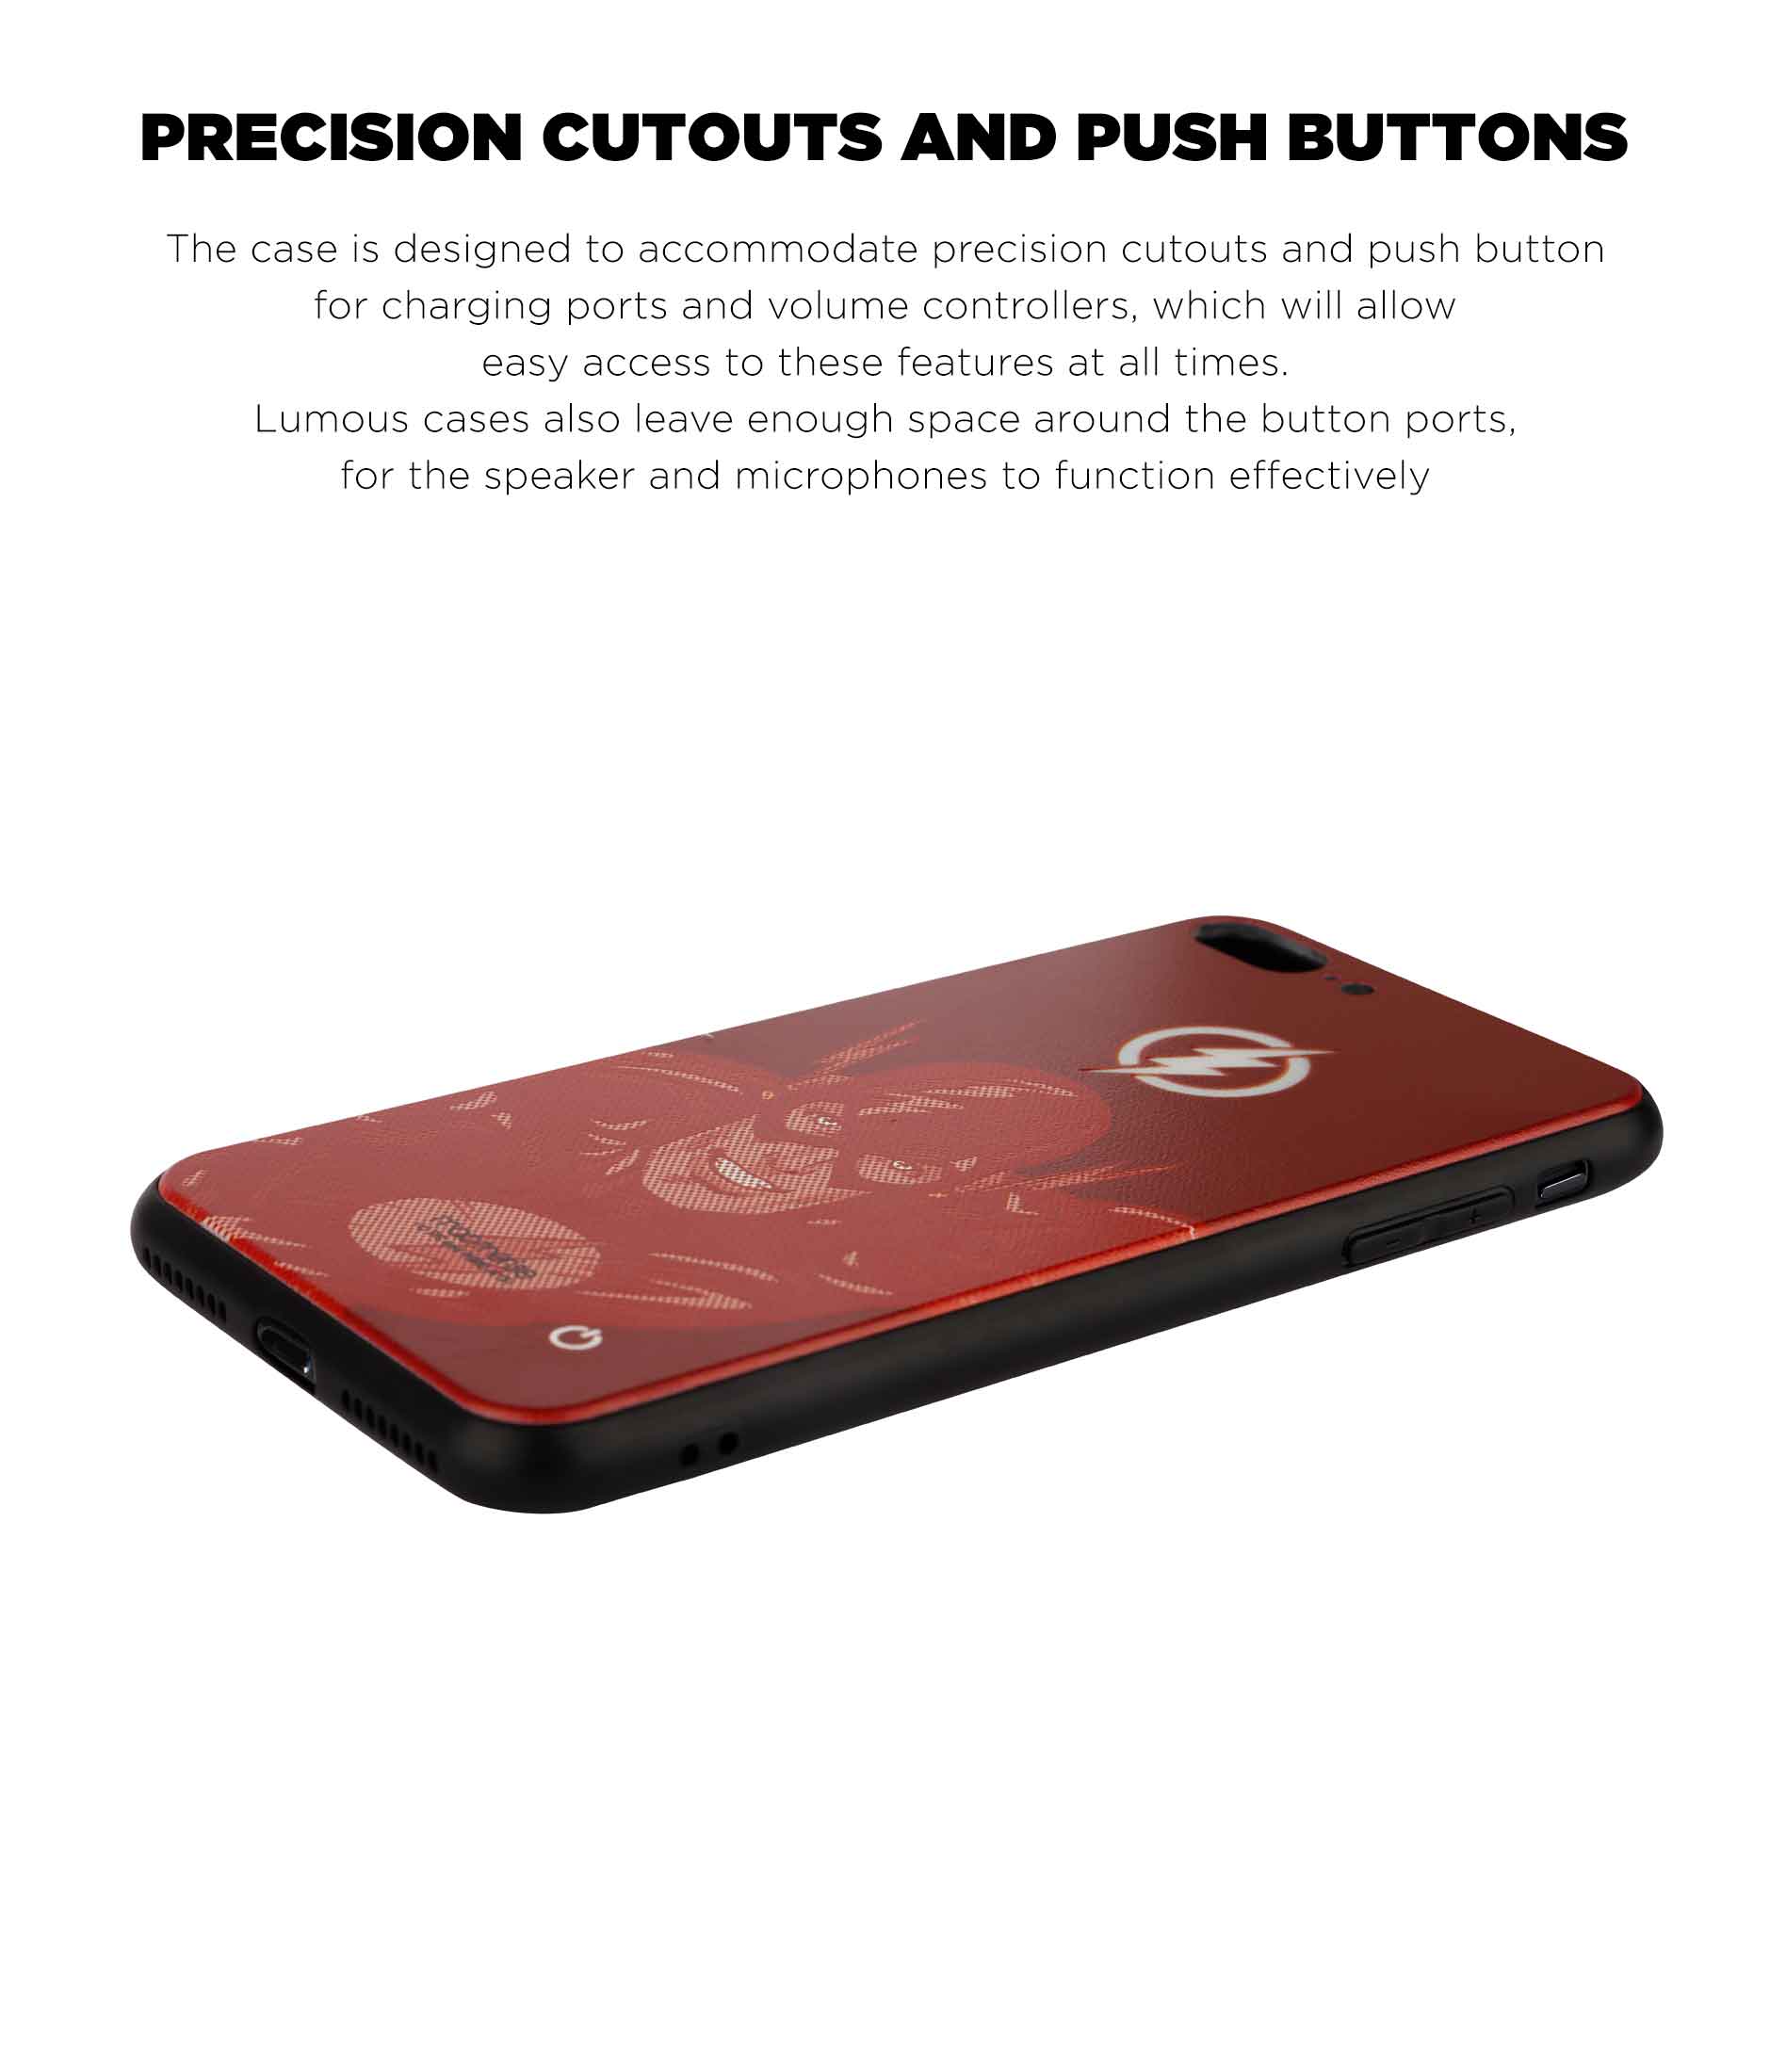 Fierce Flash Attack - Lumous LED Phone Case for iPhone 8 Plus